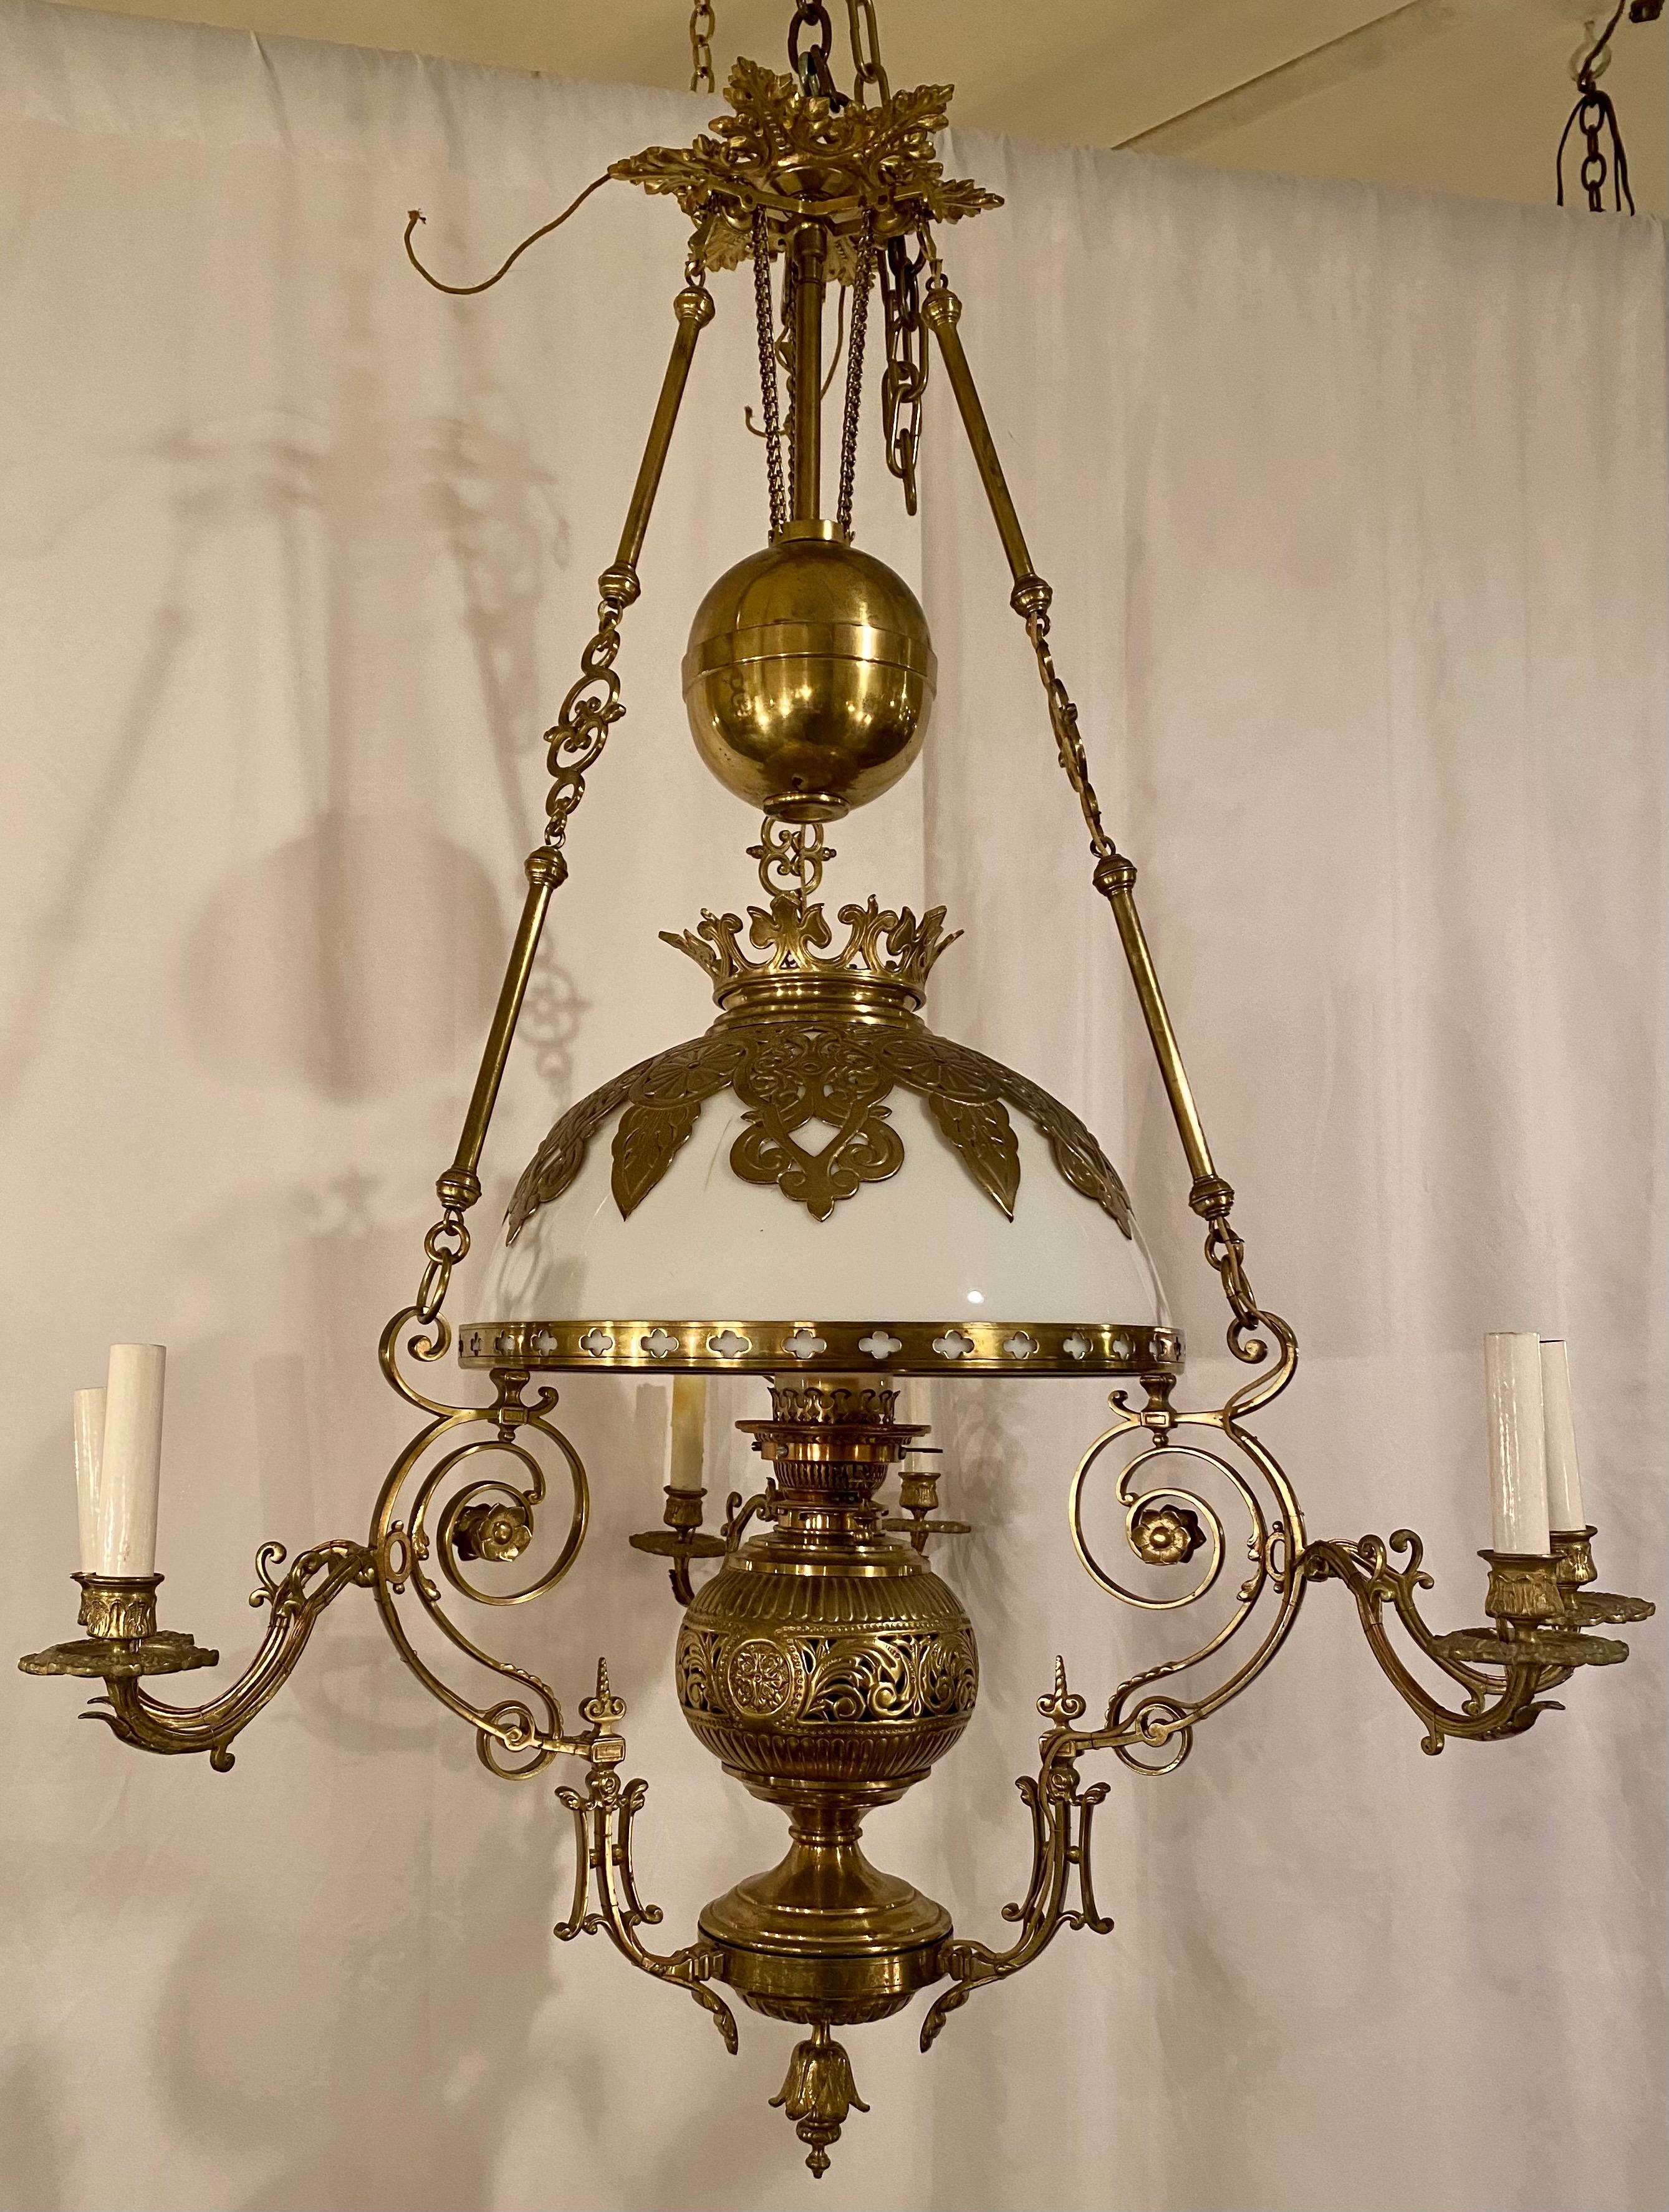 Antique brass suspension oil lamp chandelier, Circa 1860-1880.
CHB237.